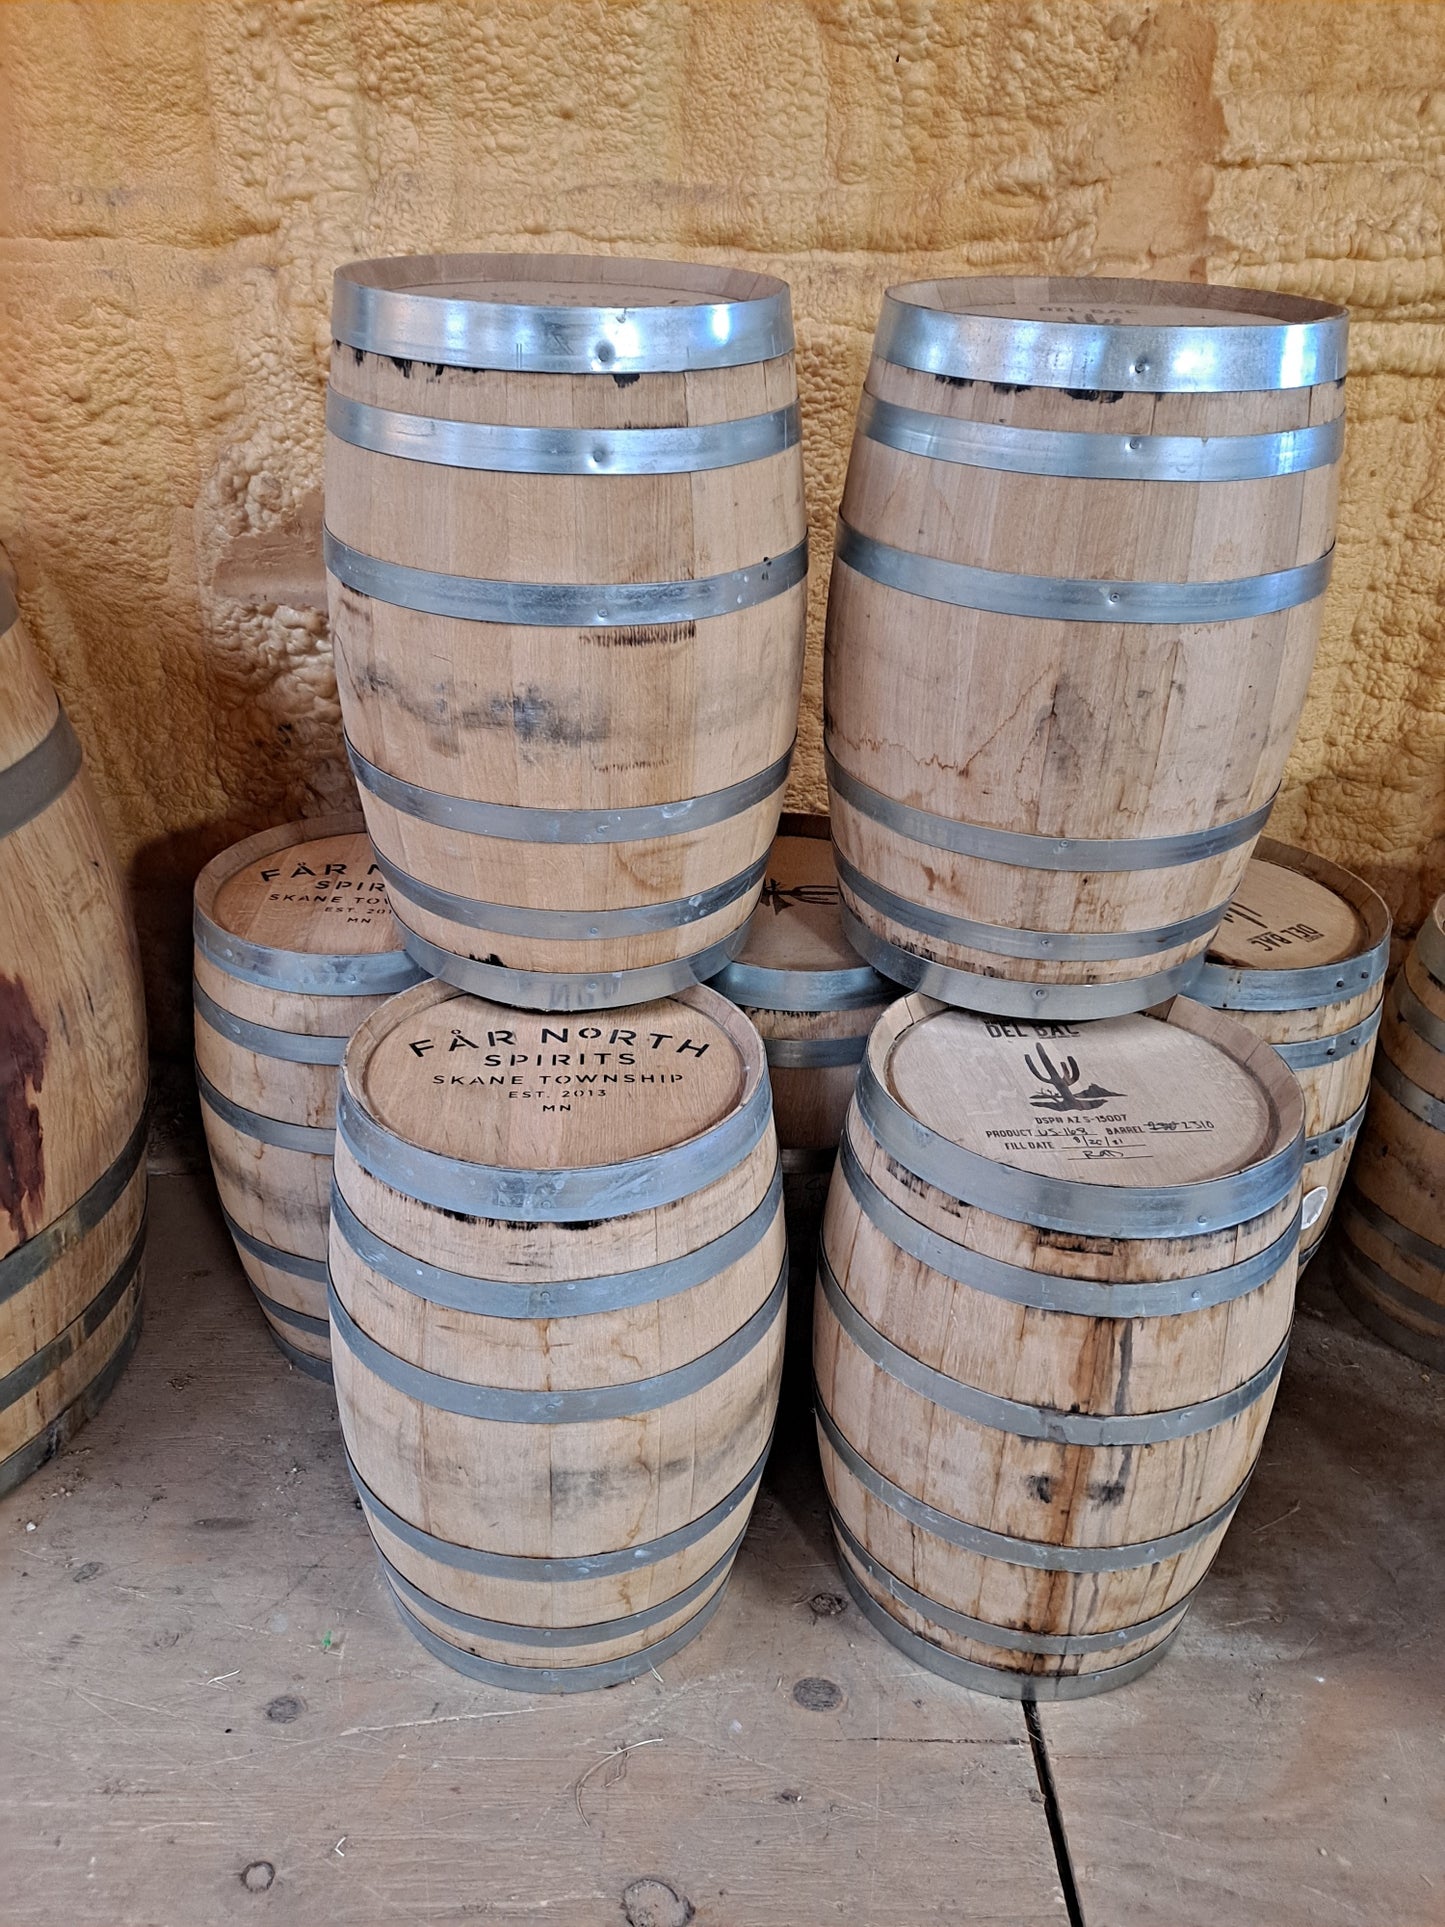 Whiskey barrel 15-gallon